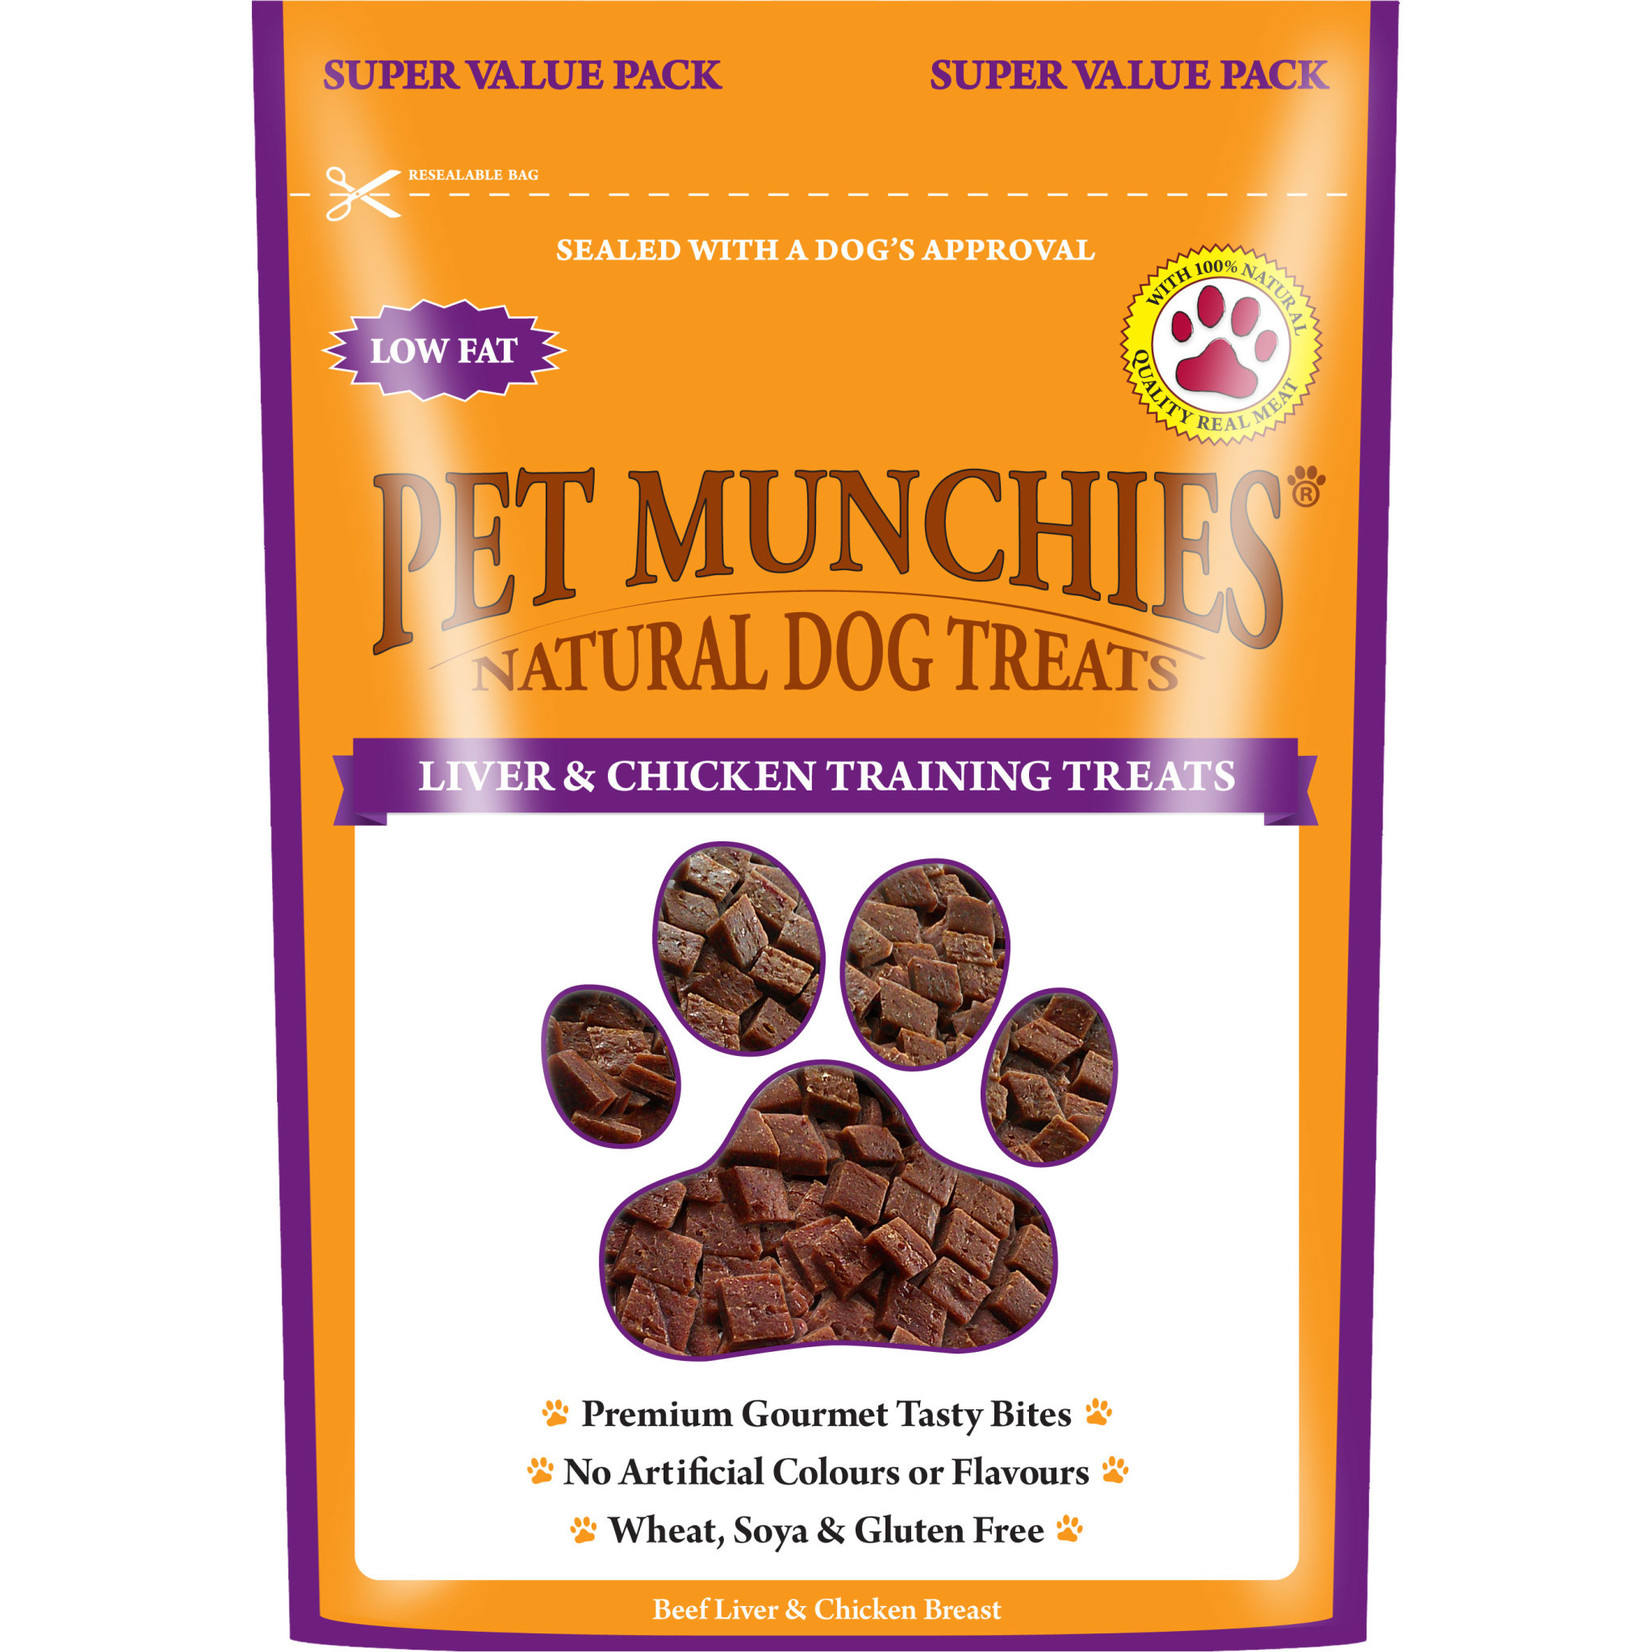 Pet Munchies Liver & Chicken Training Treats Natural Dog Treats, 50g